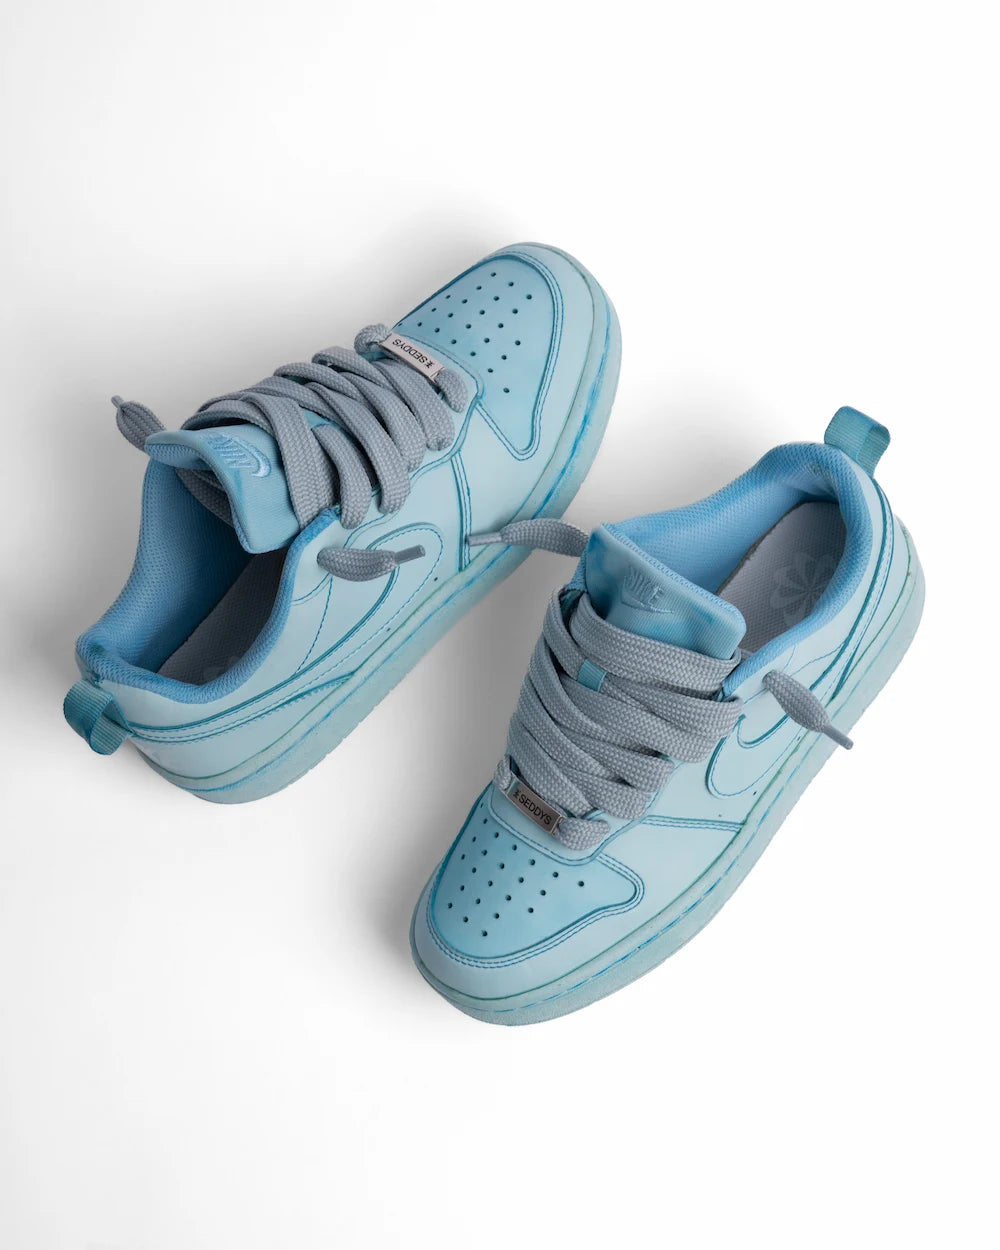 Nike Court Borough Dye Tropical Blue personalizzata in azzurro